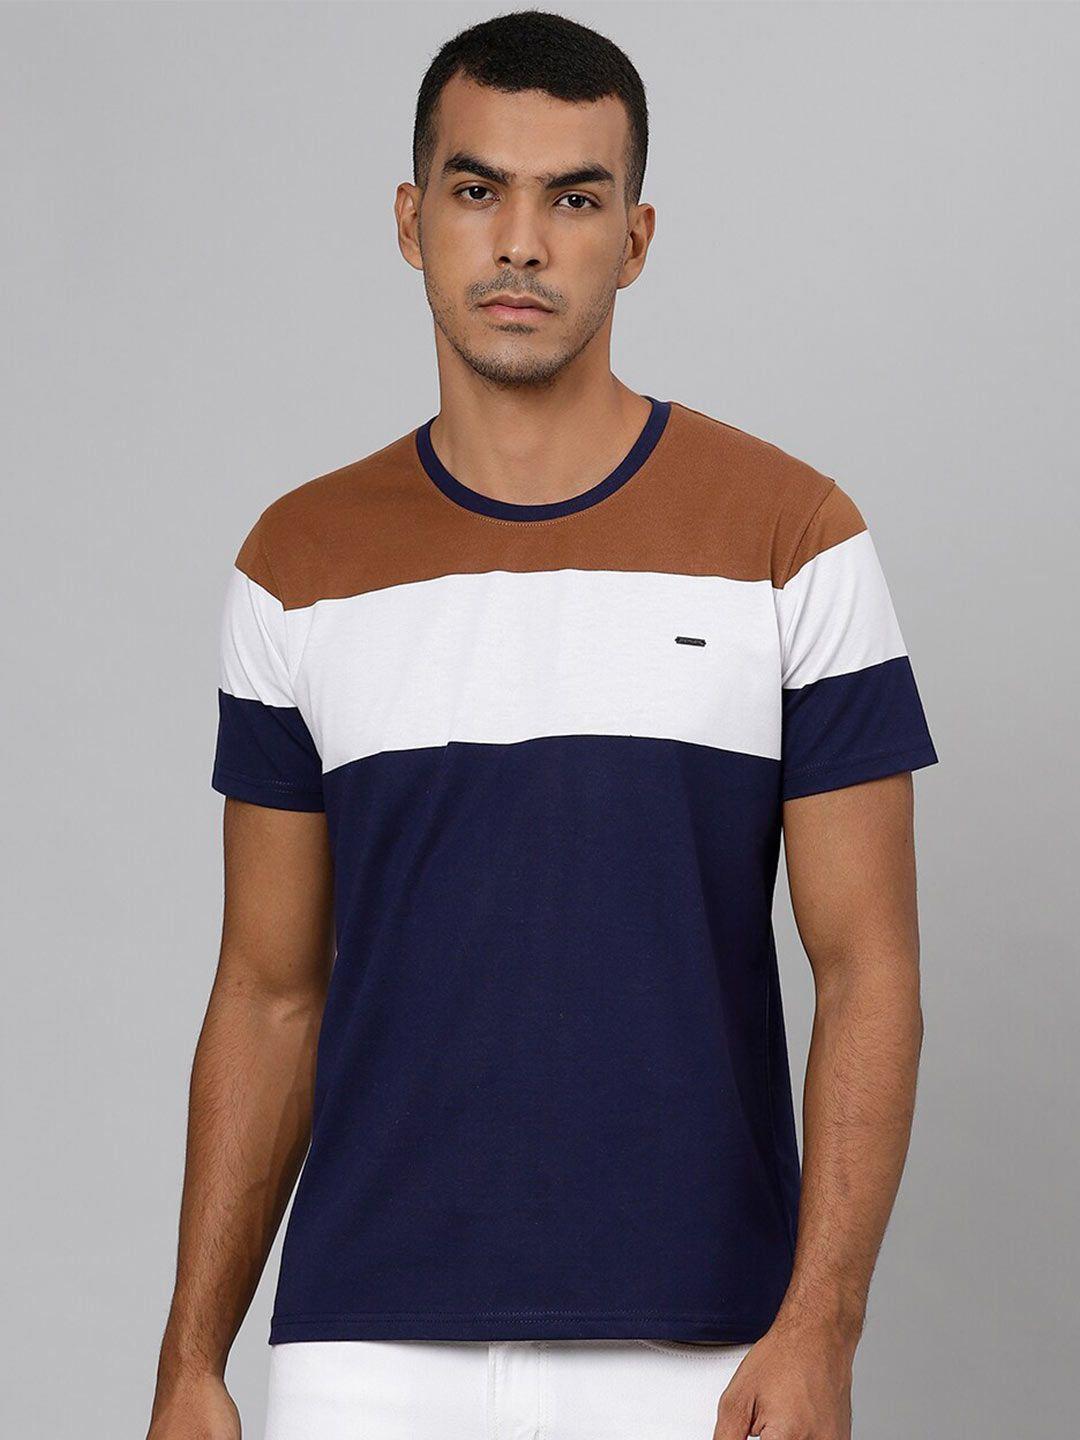 richlook men navy blue & white colourblocked slim fit t-shirt